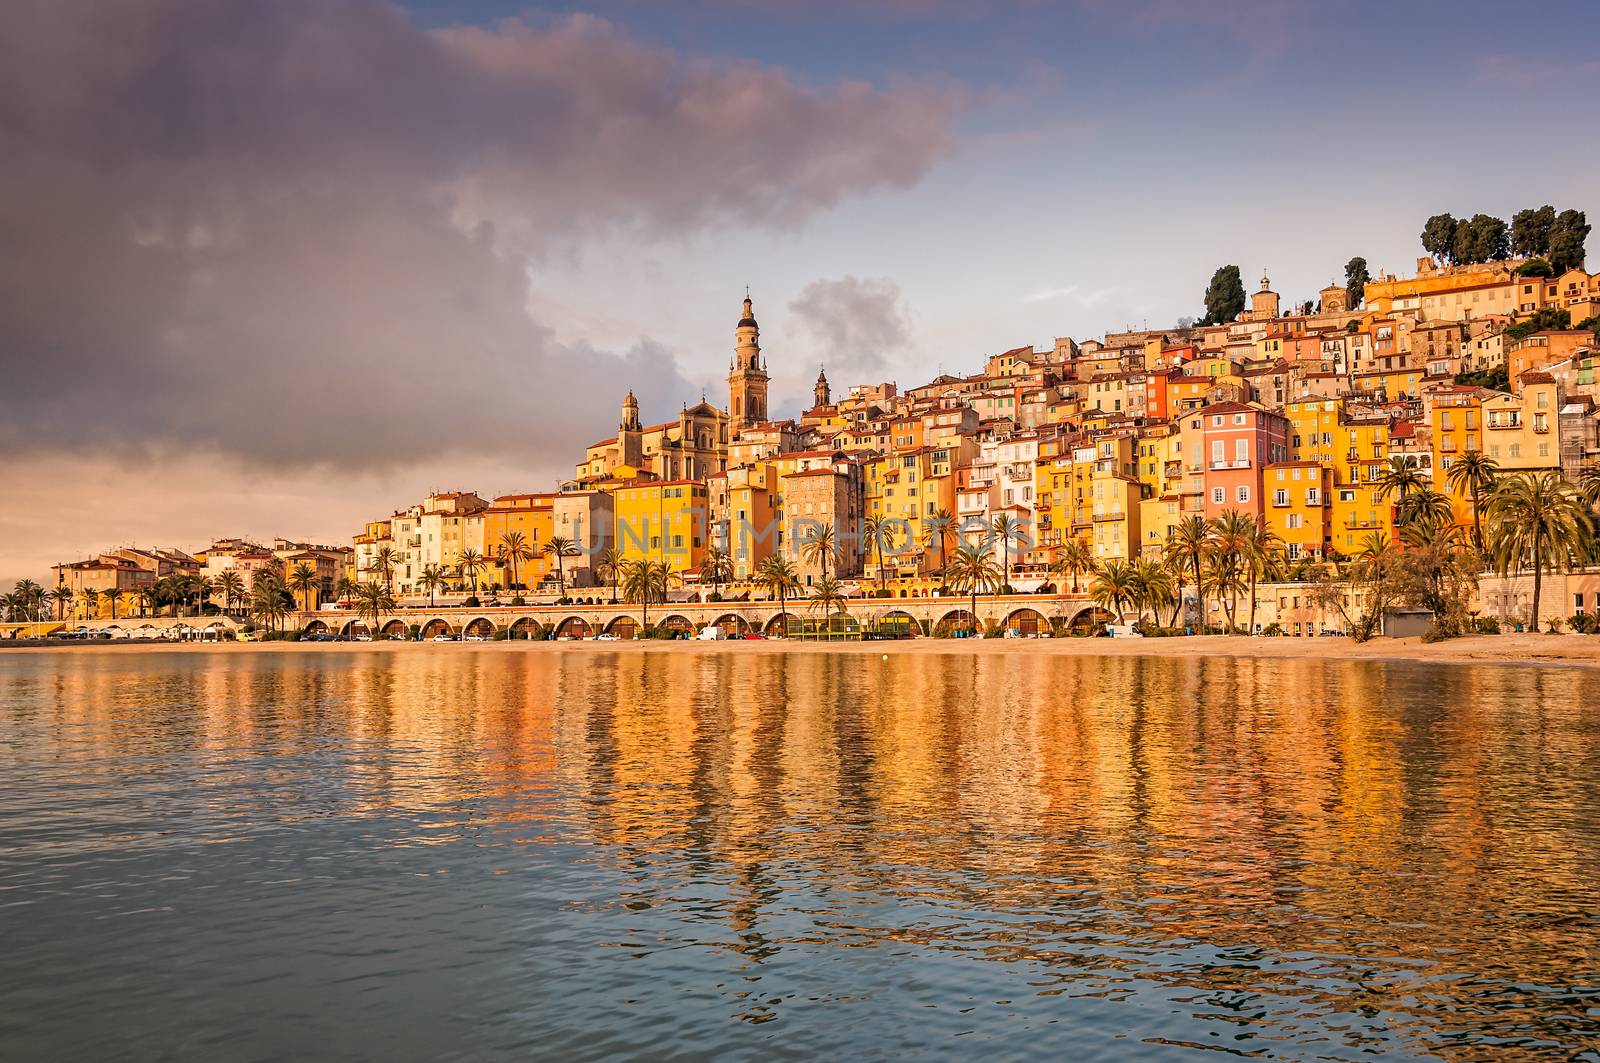 Cityscape view of colorful village Menton, Cote d'Azur, France by martinm303